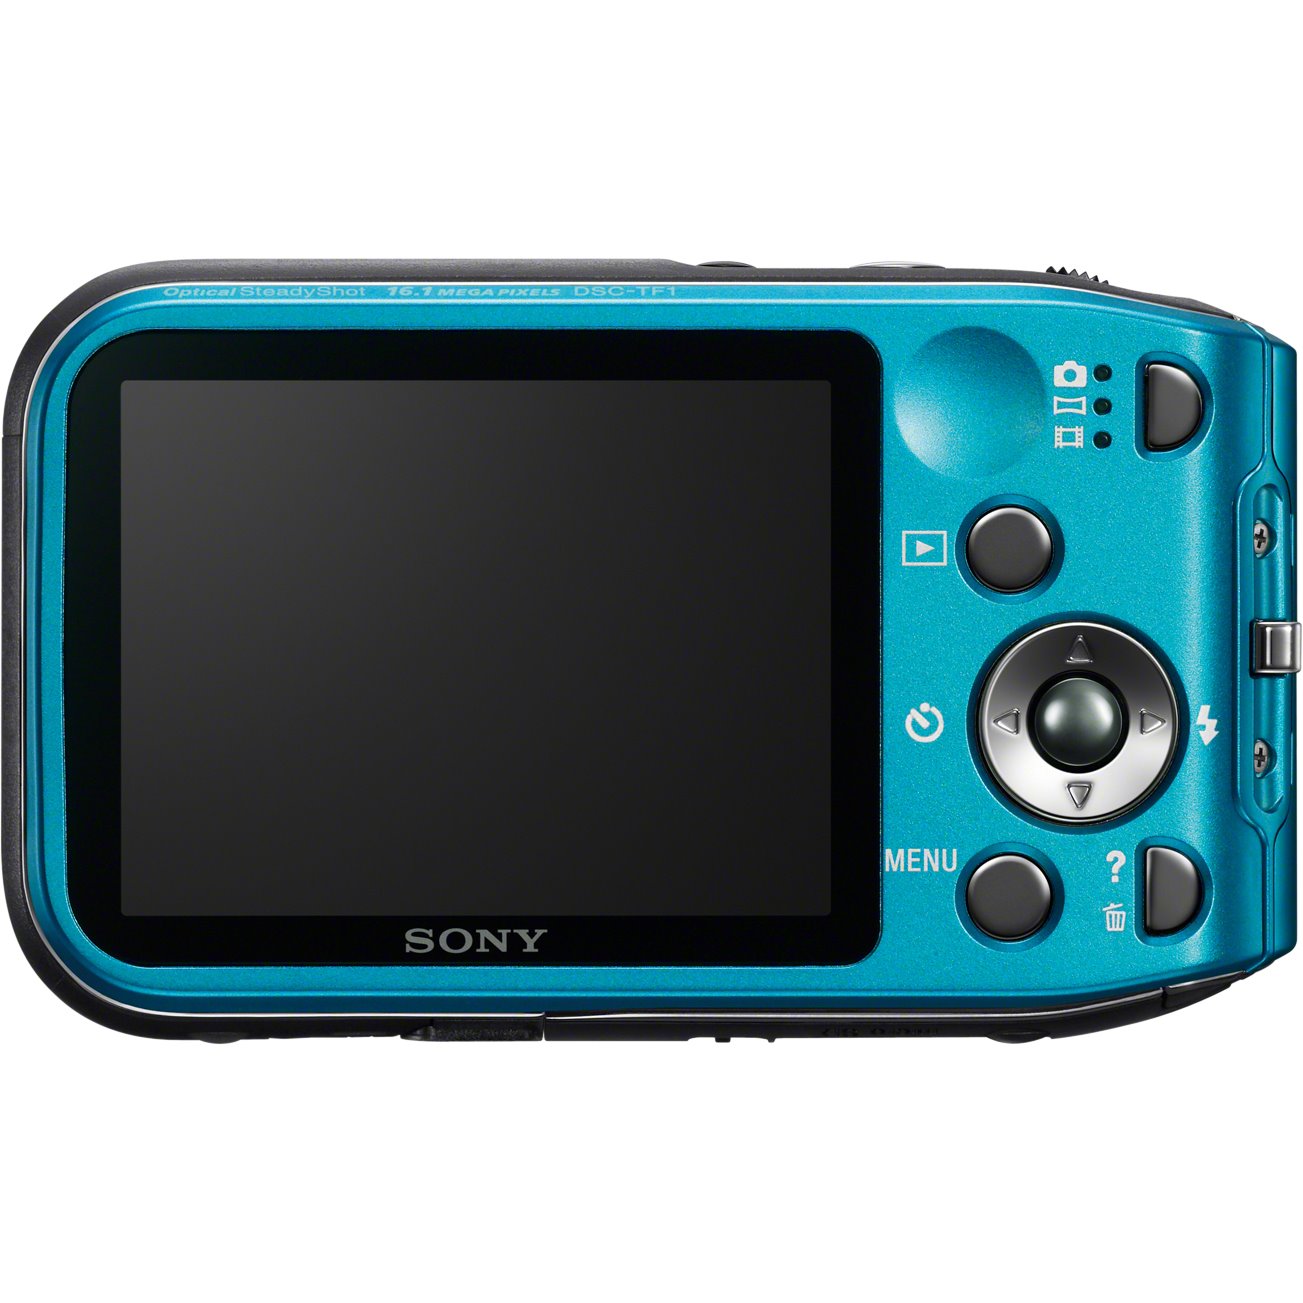 Sony Cyber-shot DSC-TF1 16.1 Megapixel Compact Camera - Blue